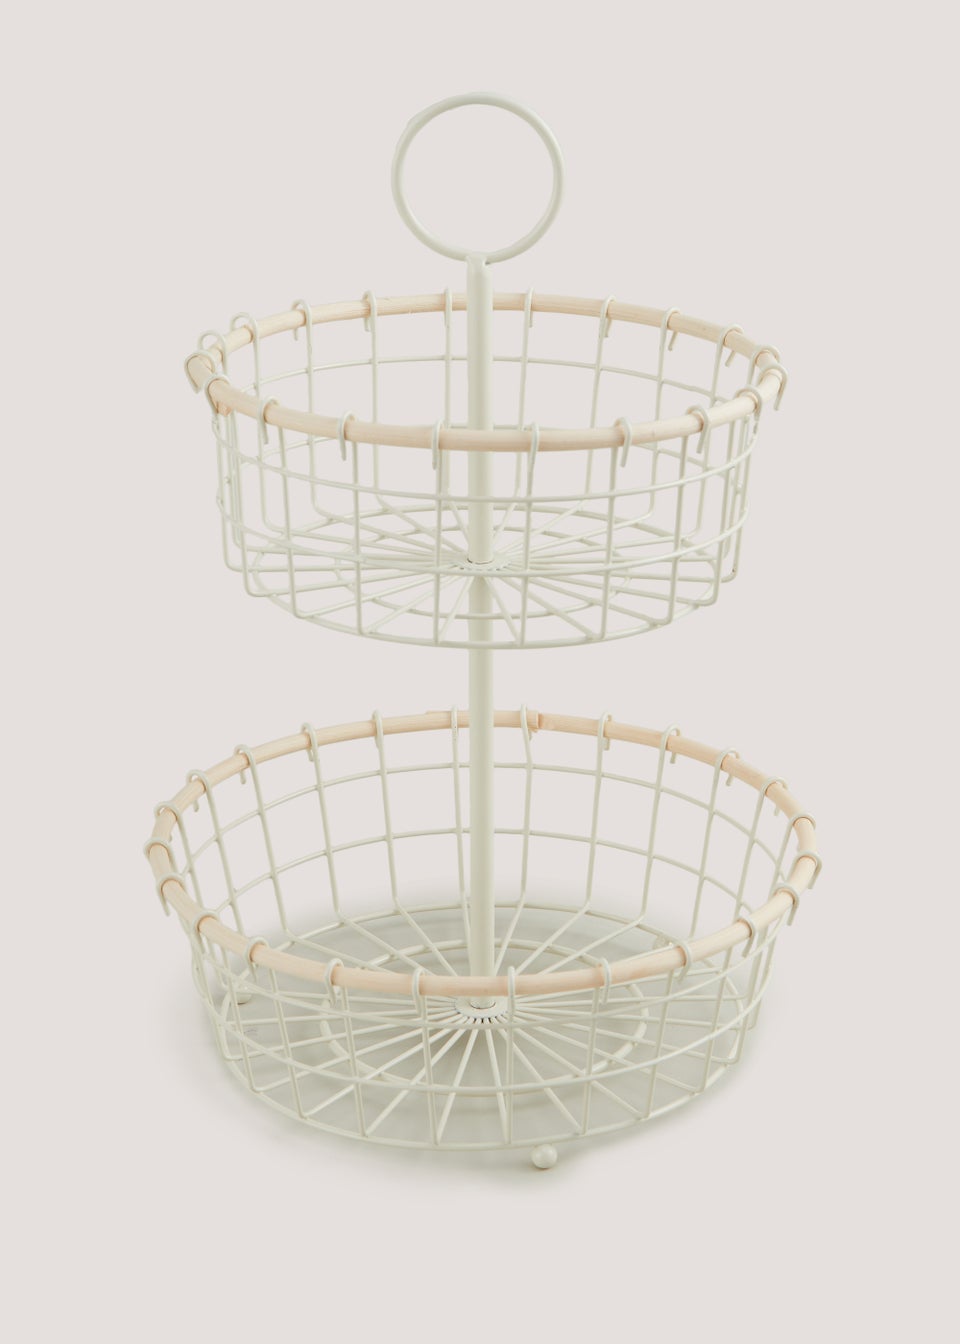 2 Tier Metal Wire Basket